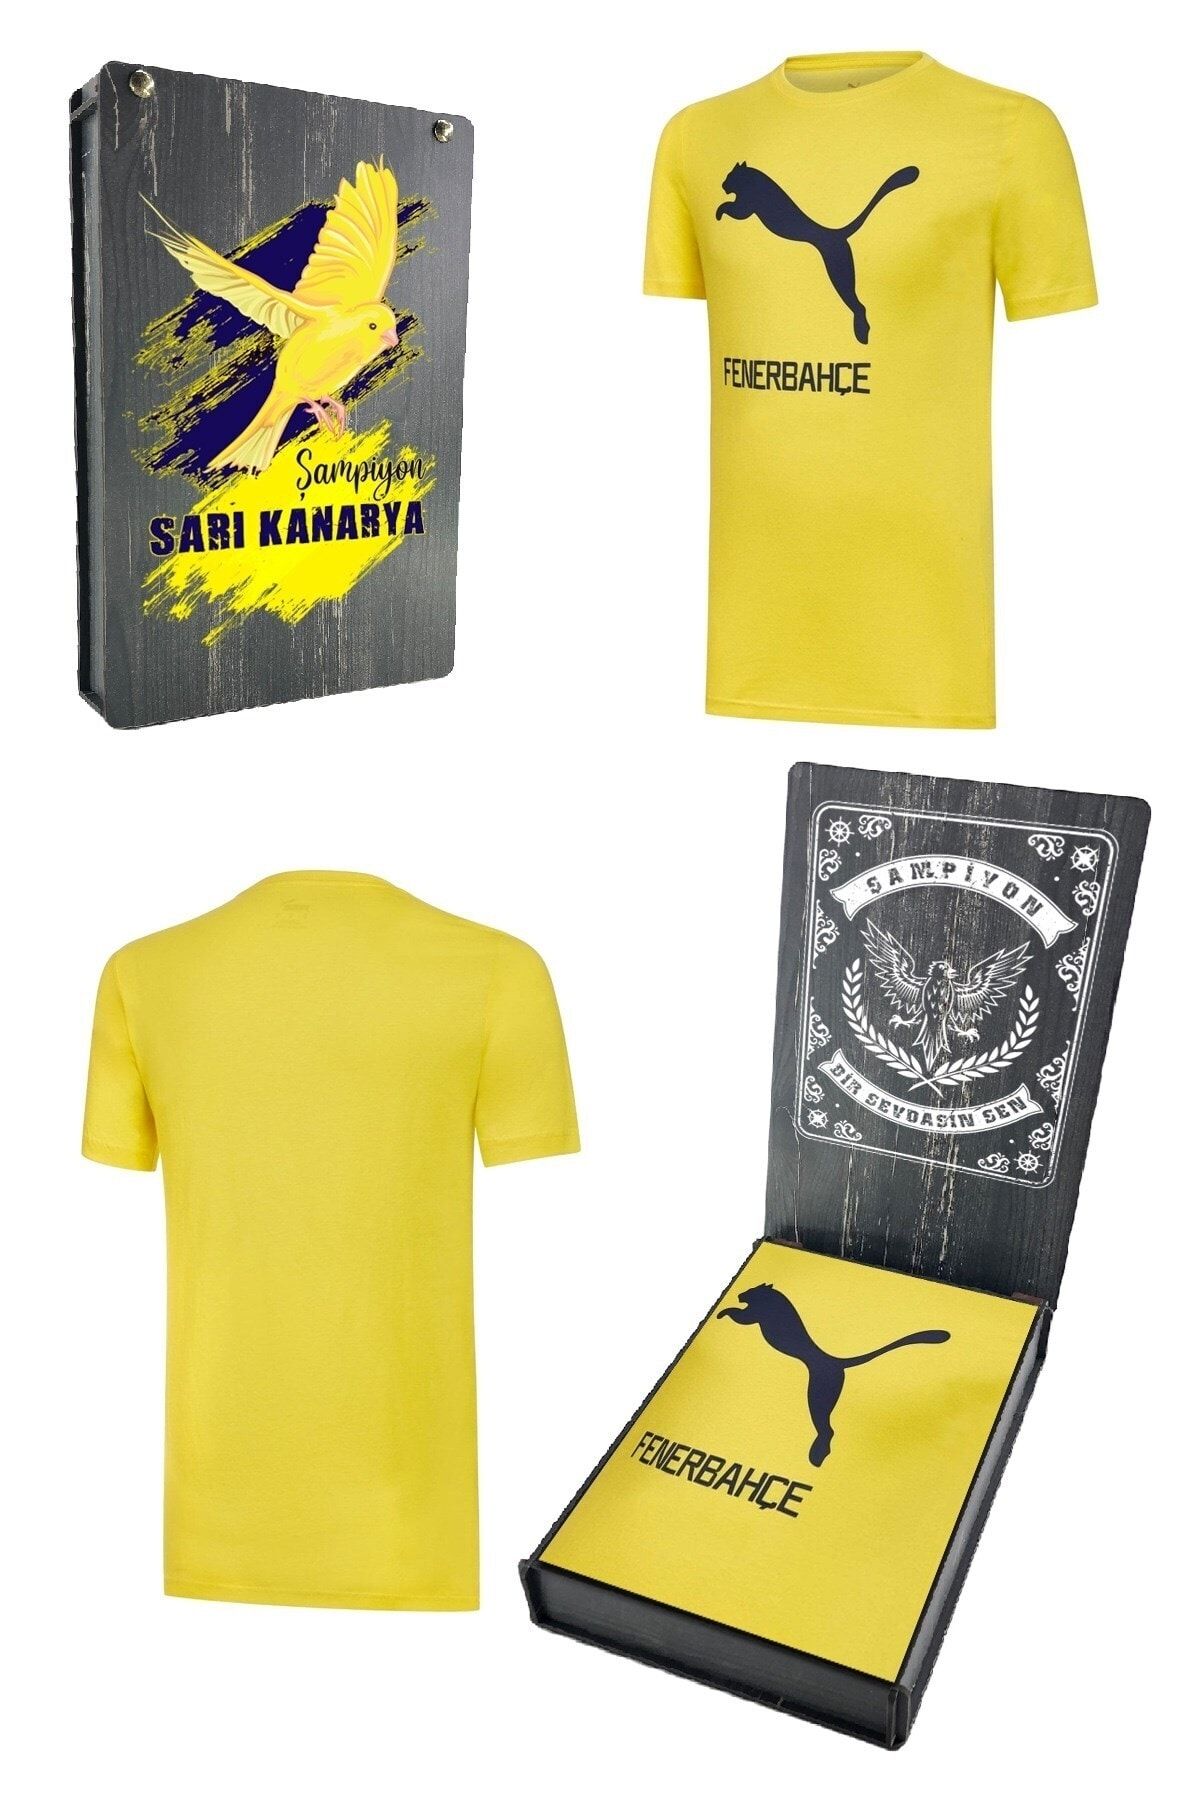 Fenerbahçe Orijinal Puma Sıfır Yaka Sarı T-Shirt Ahşap Kutulu